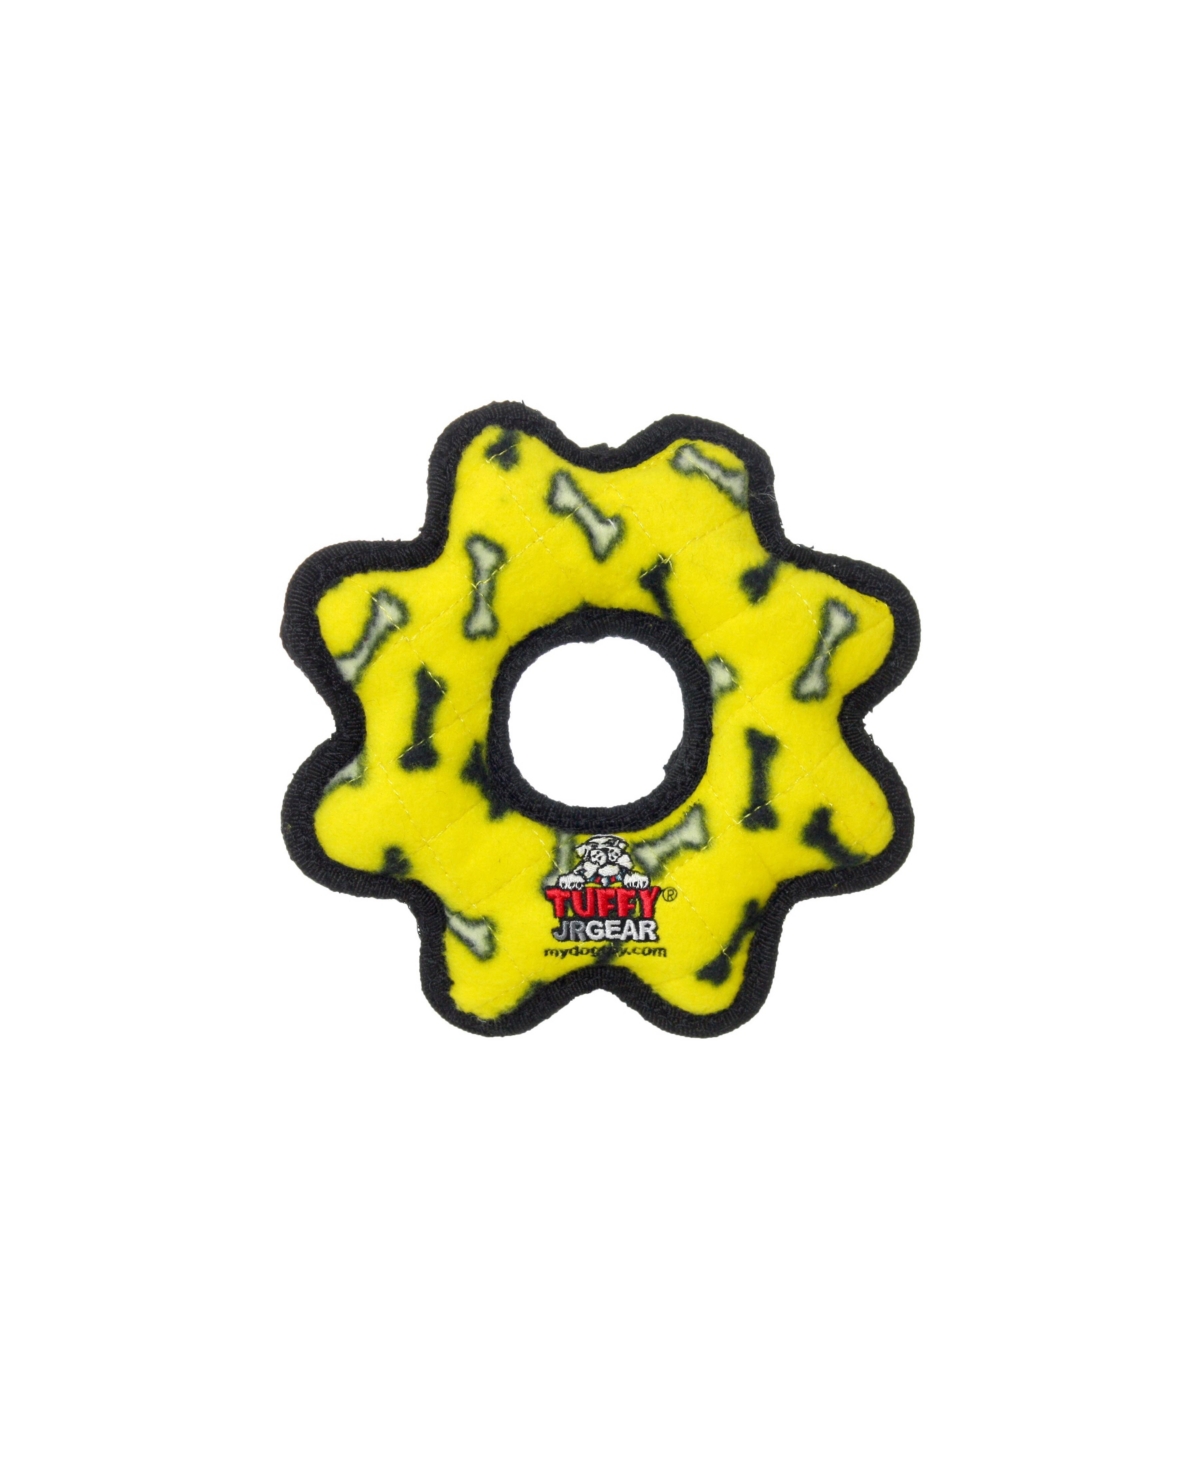 Jr Gear Ring Yellow Bone, Dog Toy - Bright Yellow